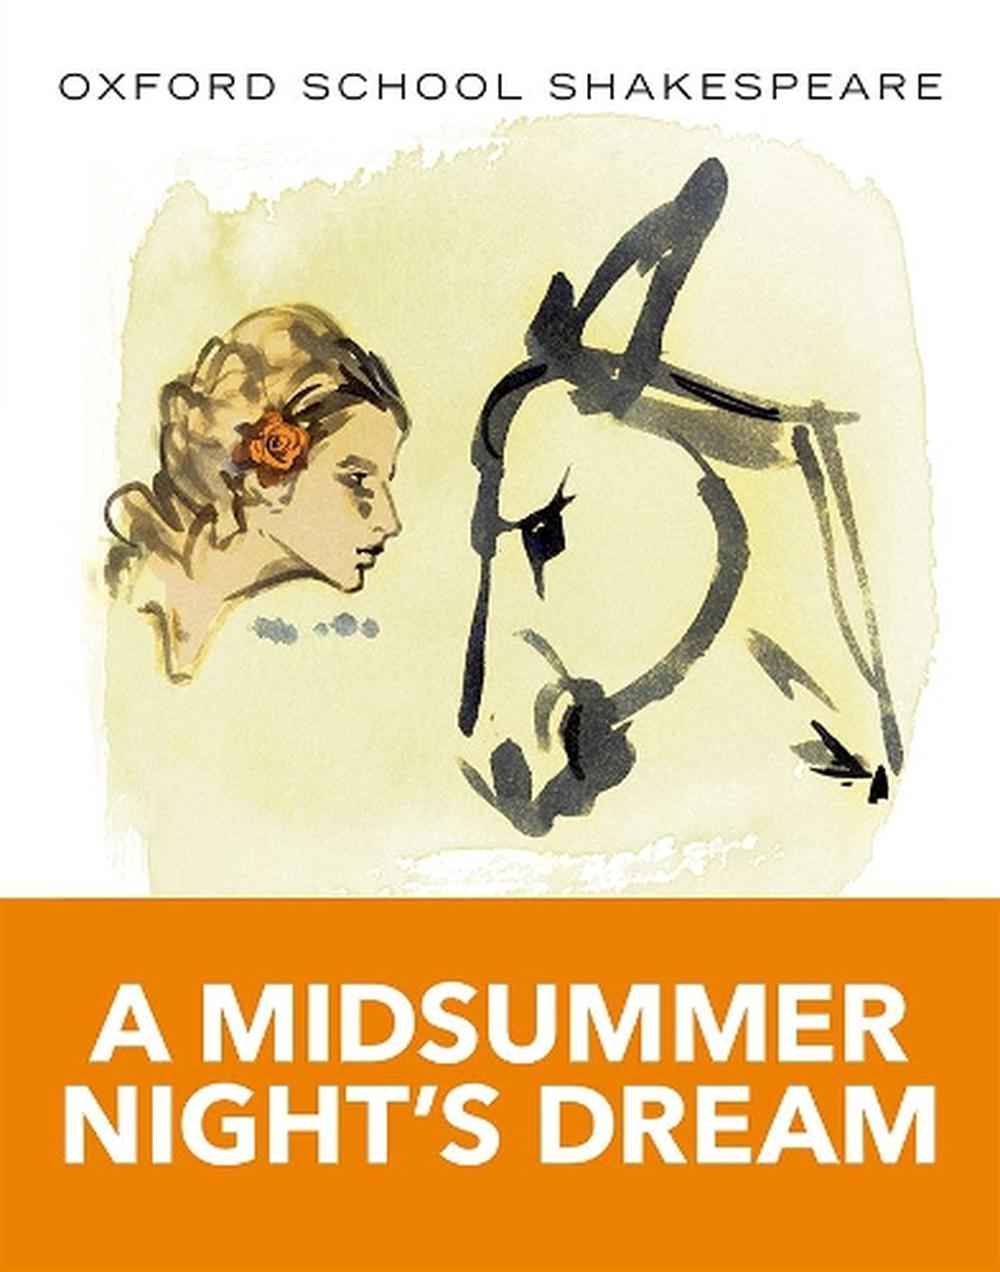 creative writing midsummer night's dream